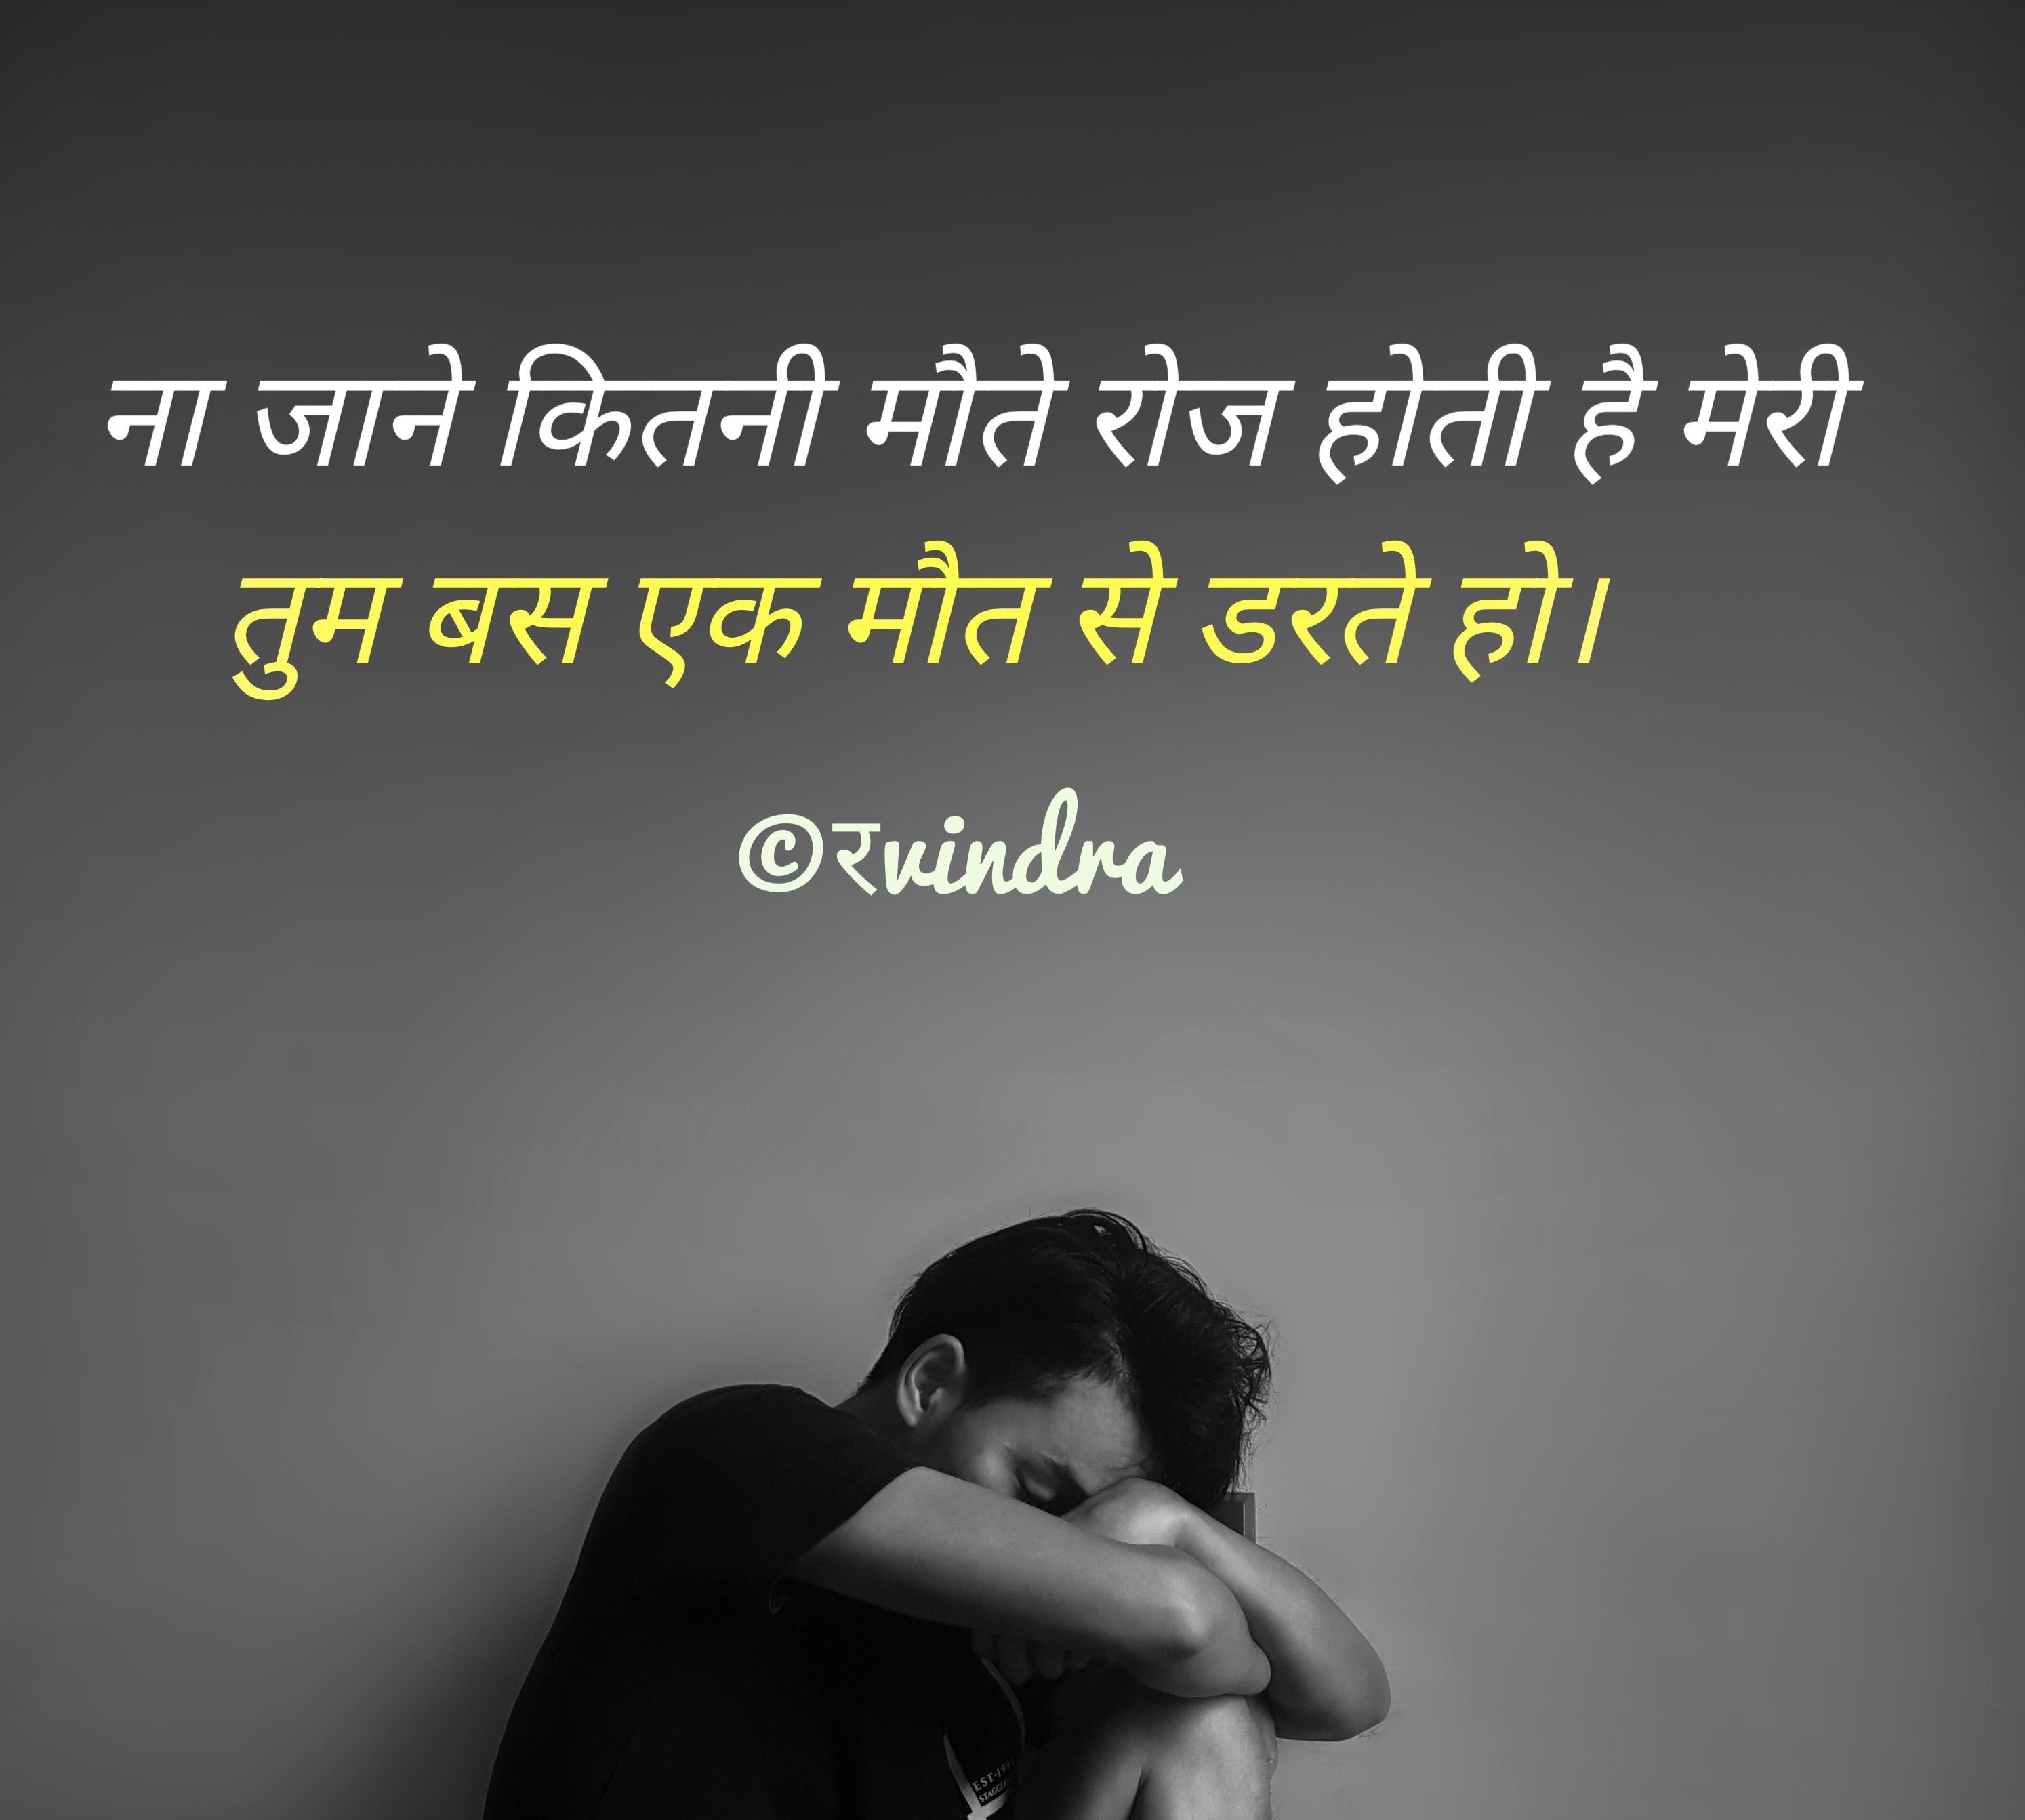 essay on depression in hindi